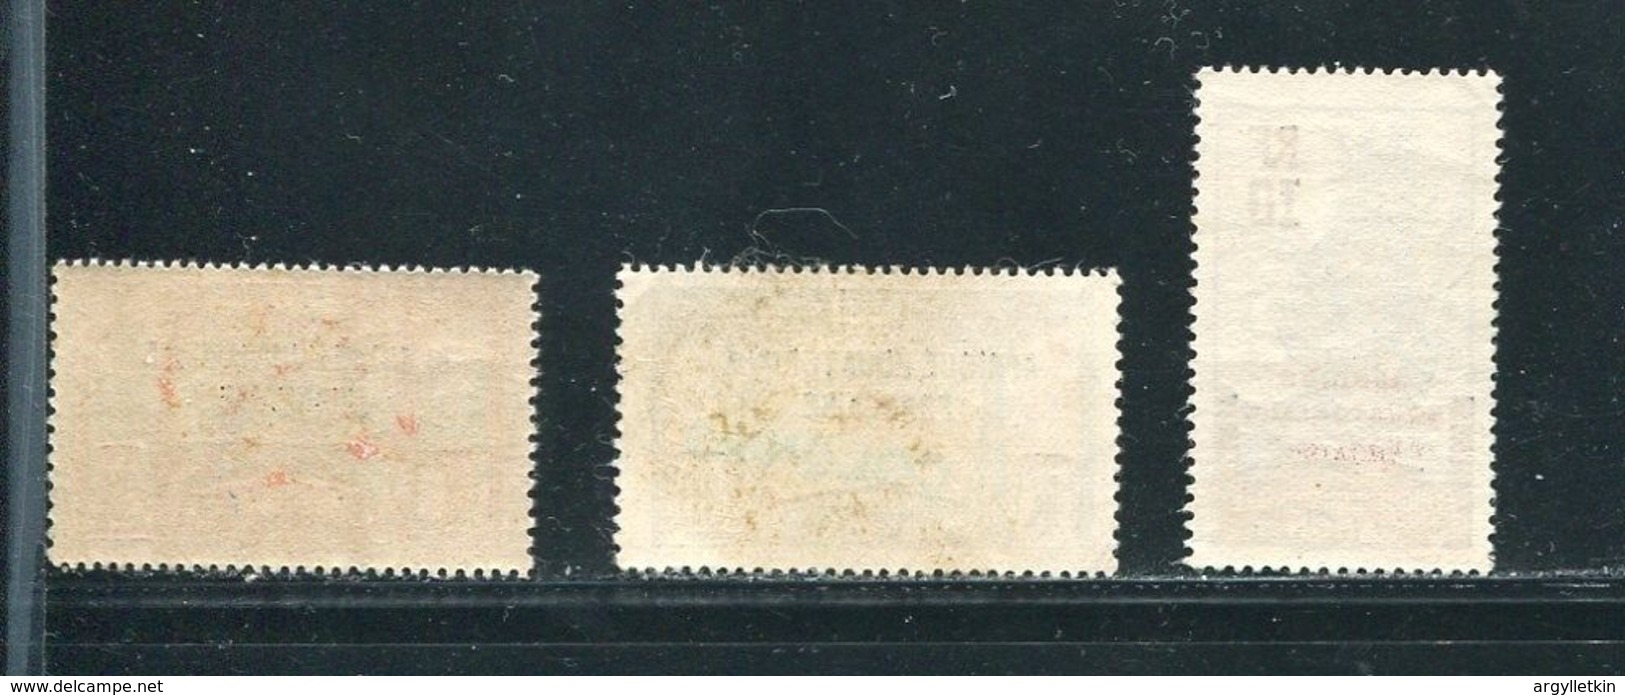 FRENCH AFRICA GABON U.P.U. SPECIMENS SPANISH POST OFFICE 1926 - Used Stamps